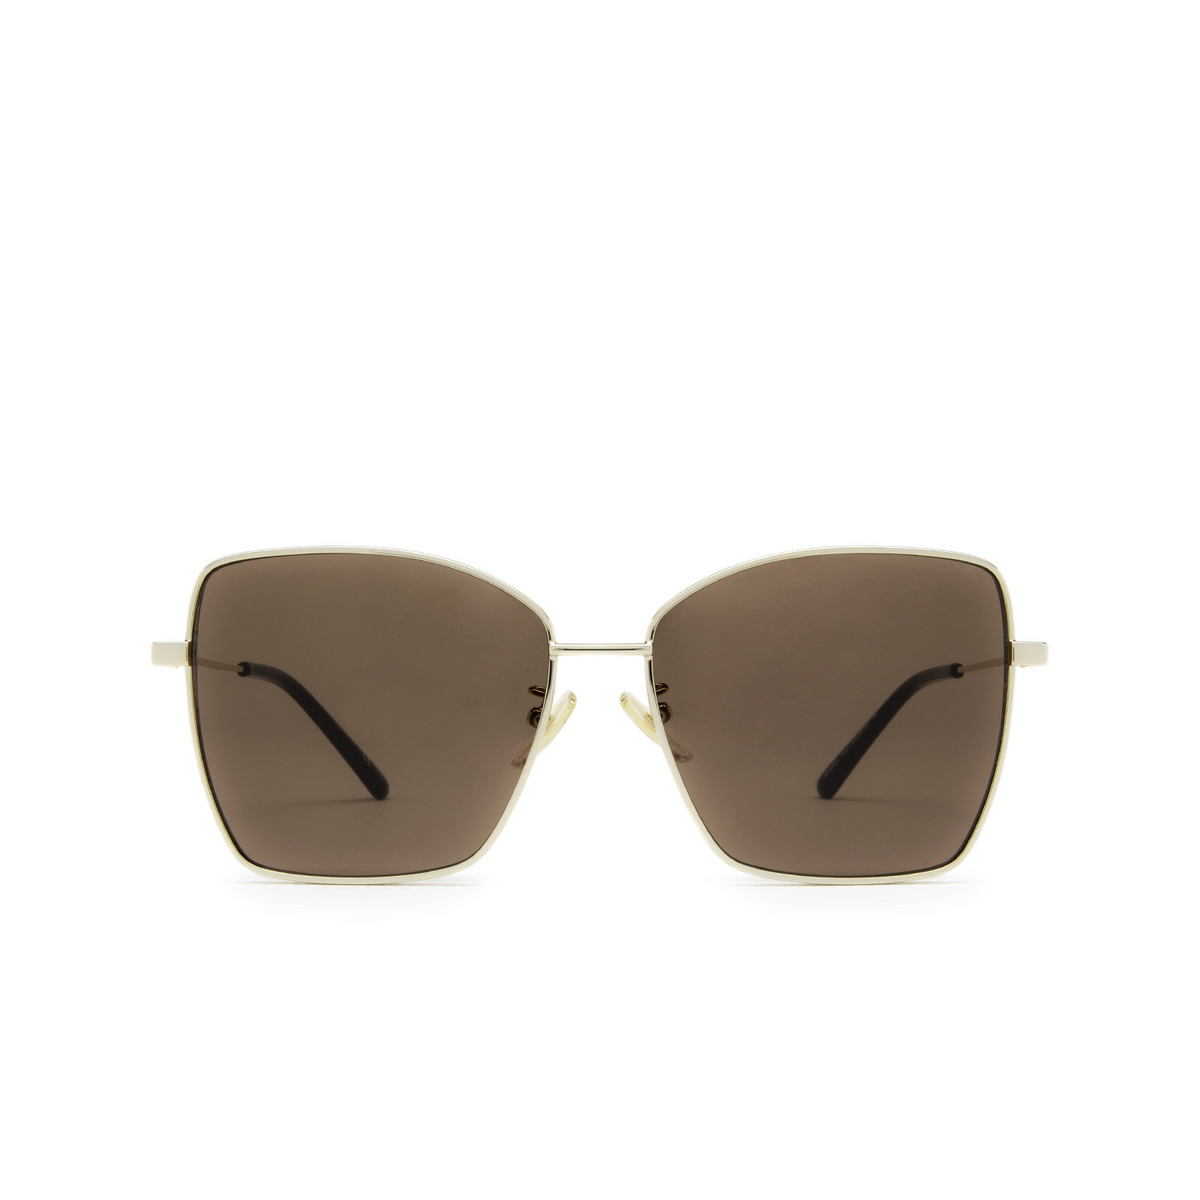 Balenciaga® Butterfly Sunglasses: BB0196SA color Gold 002 - front view.